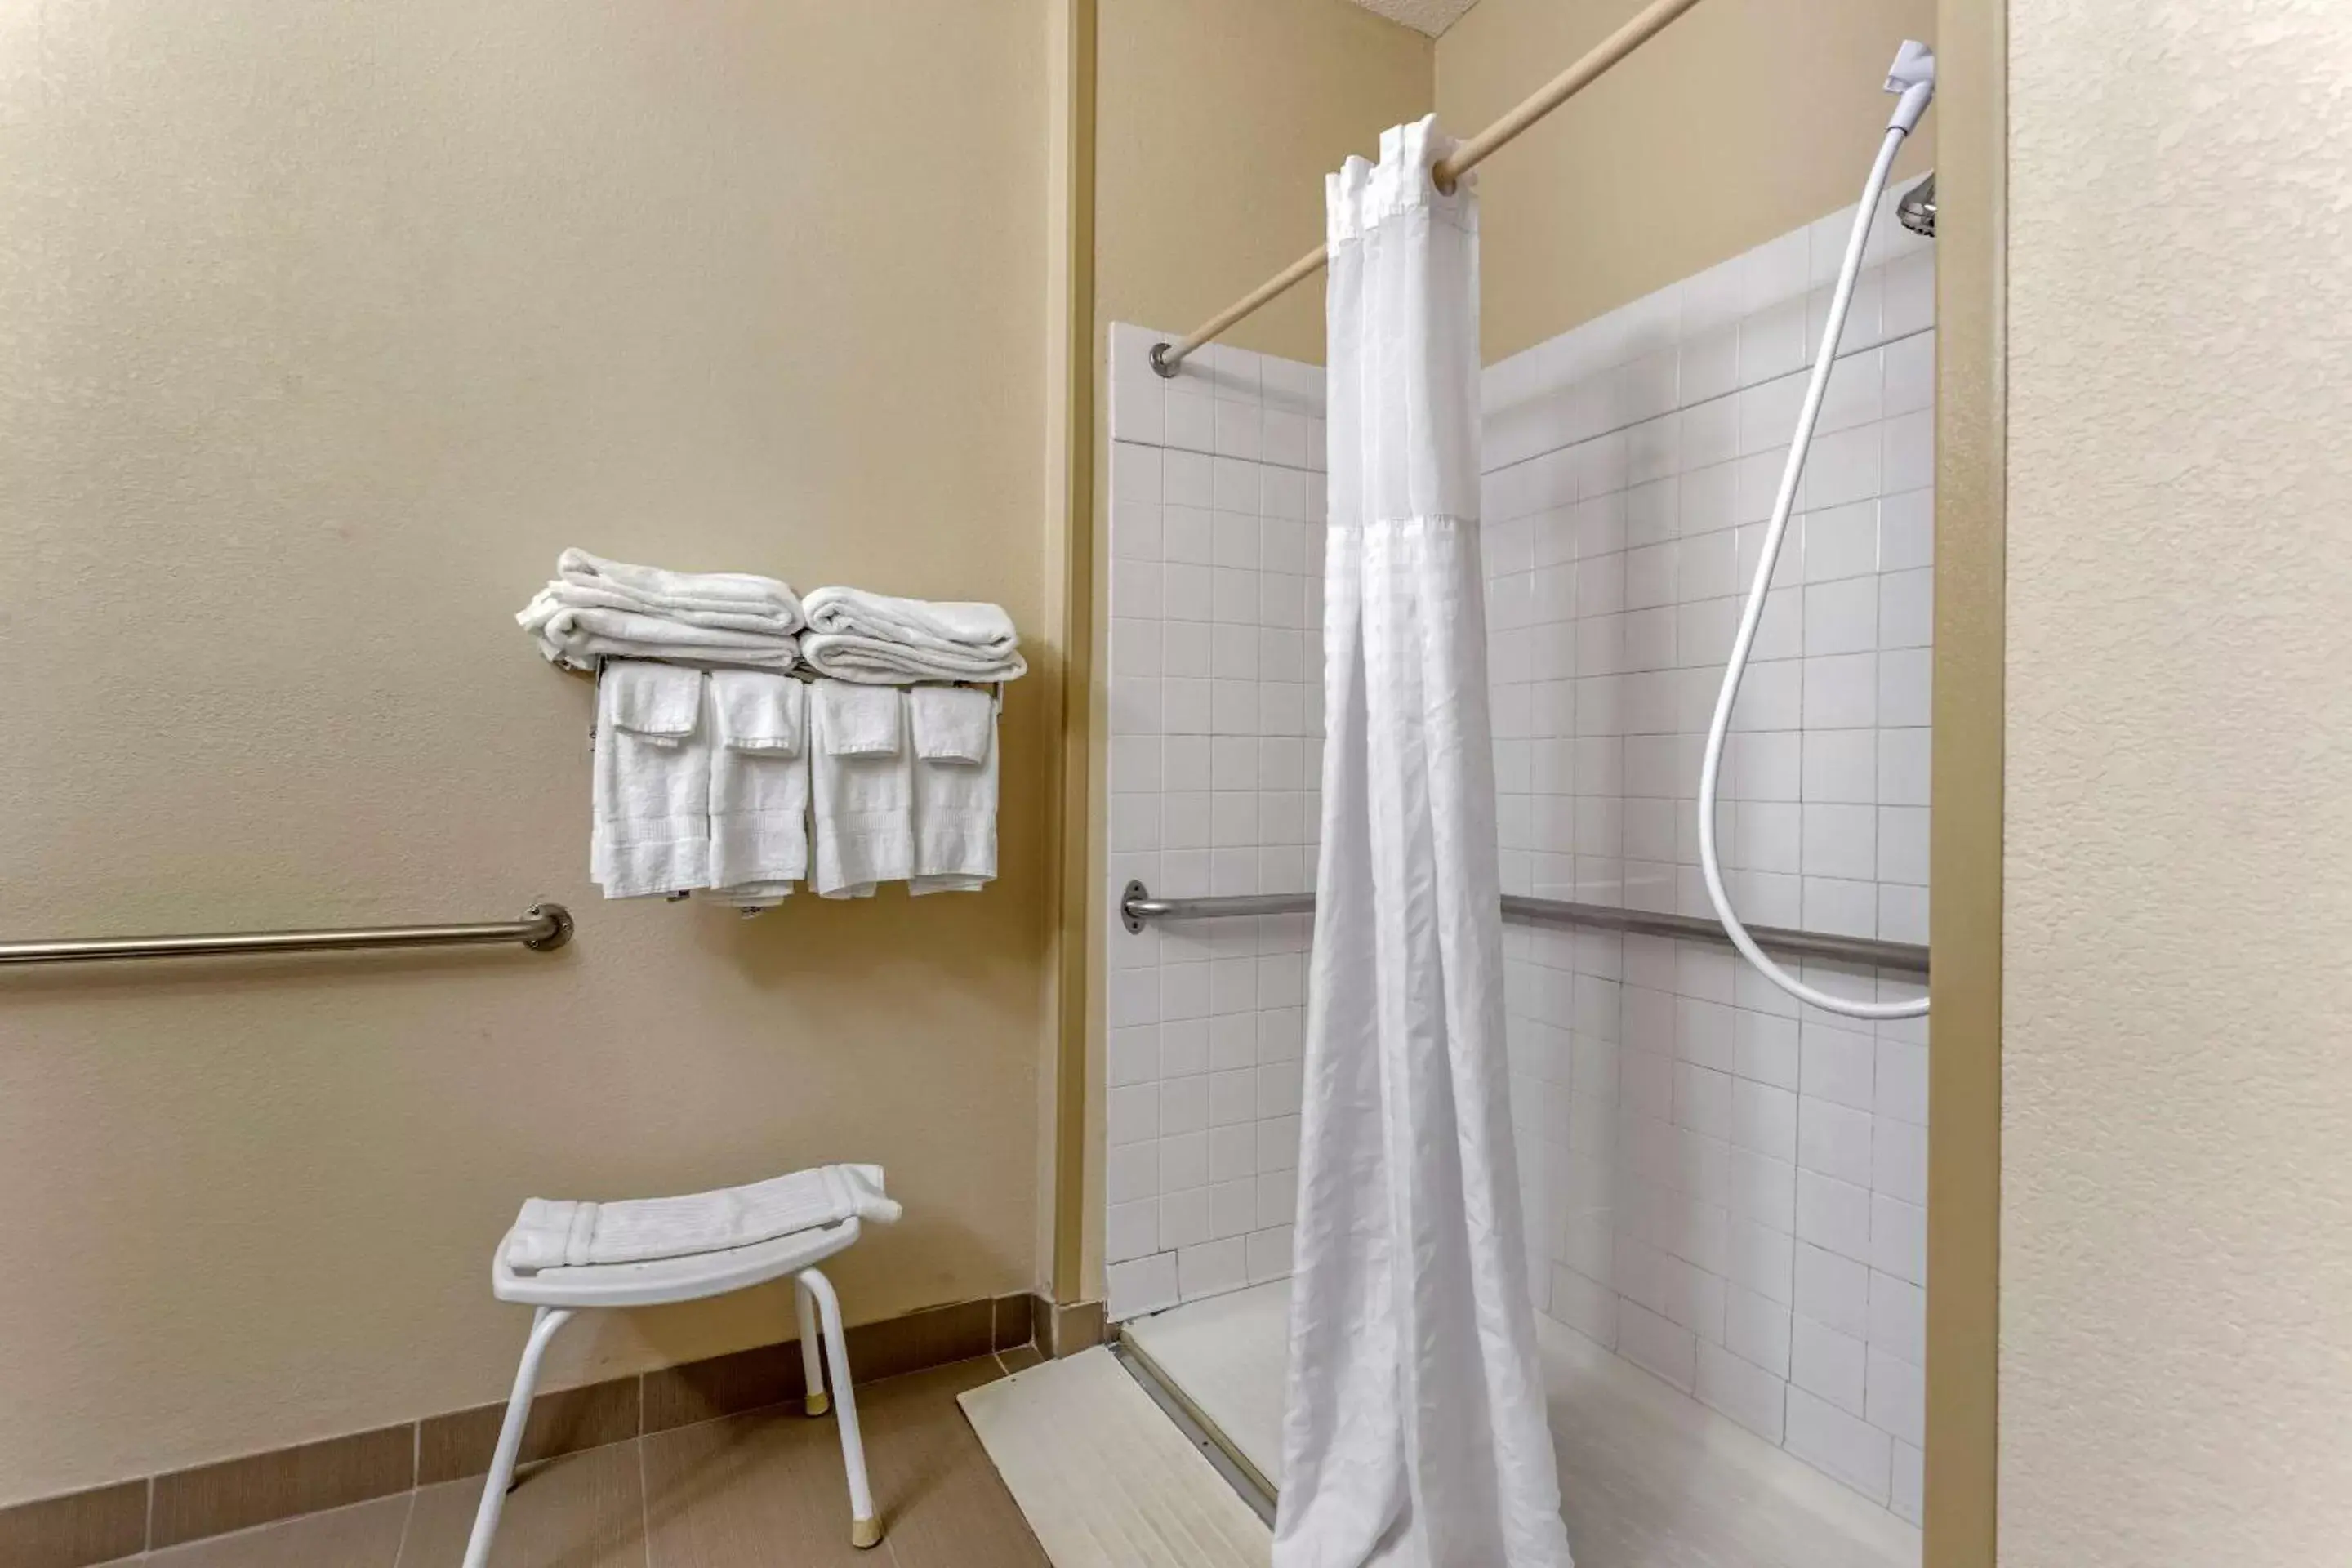 Bathroom in Comfort Inn Gurnee near Six Flags